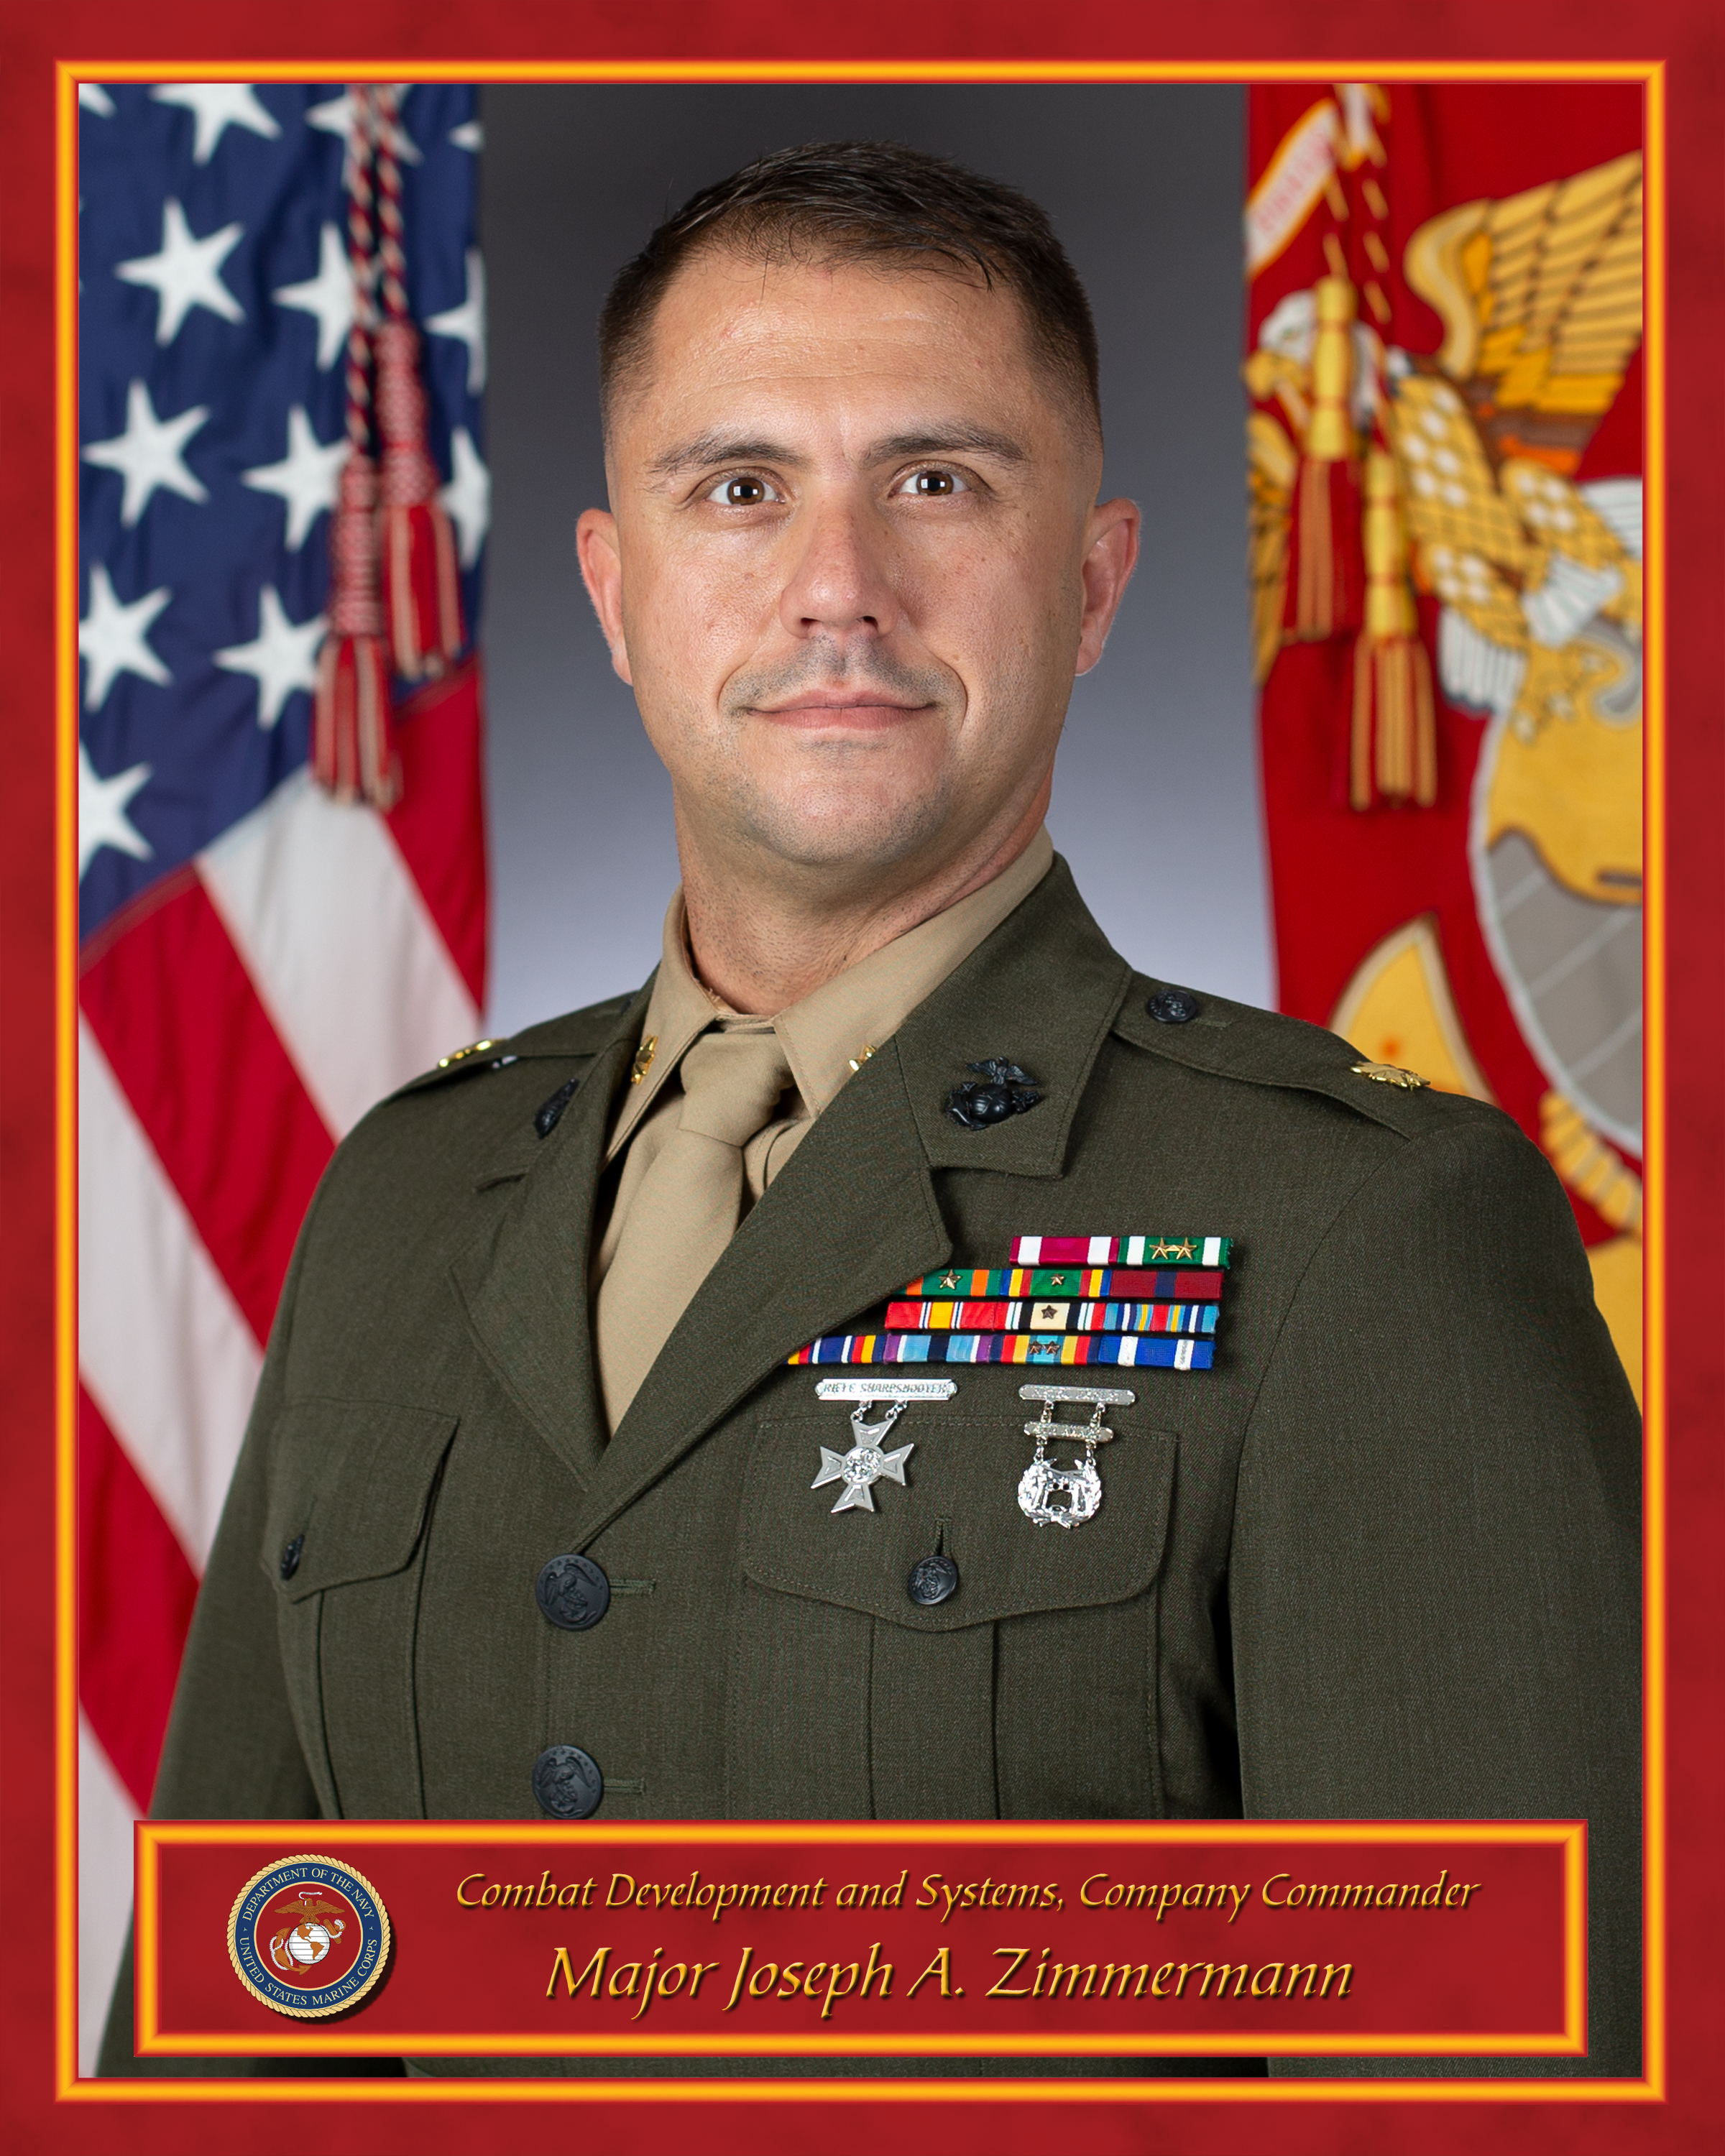 Major Joseph A. Zimmerman